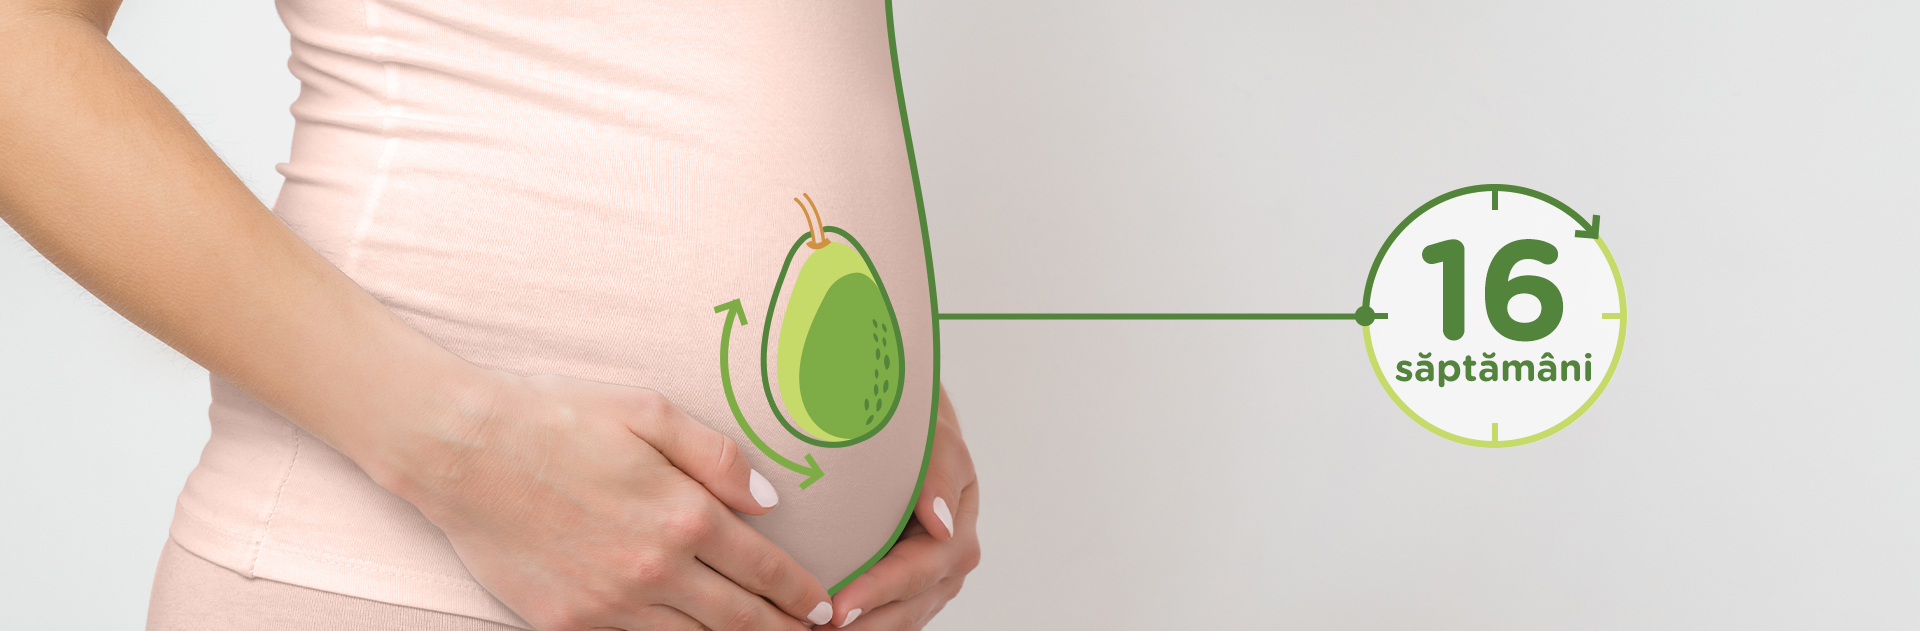 Bebelusul in Saptamana 16 de sarcina fruct: avocado